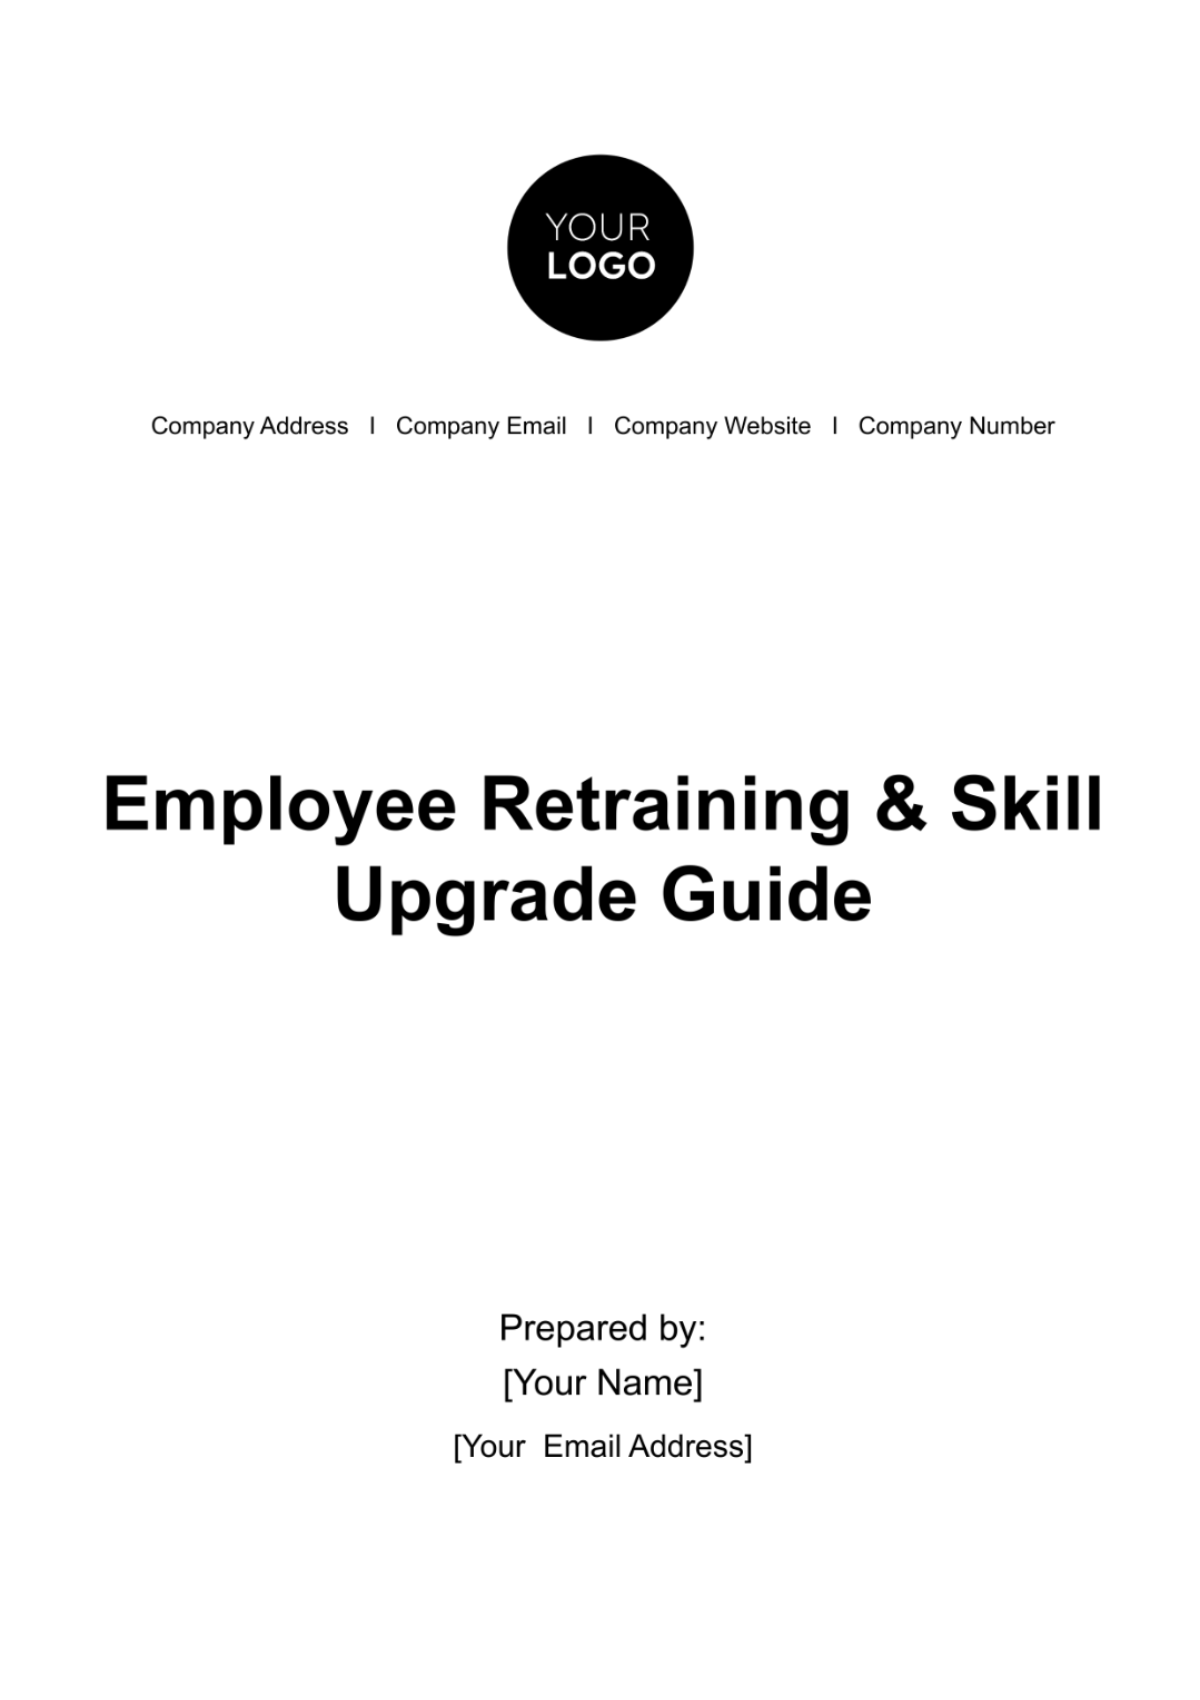 Free Employee Retraining & Skill Upgrade Guide HR Template